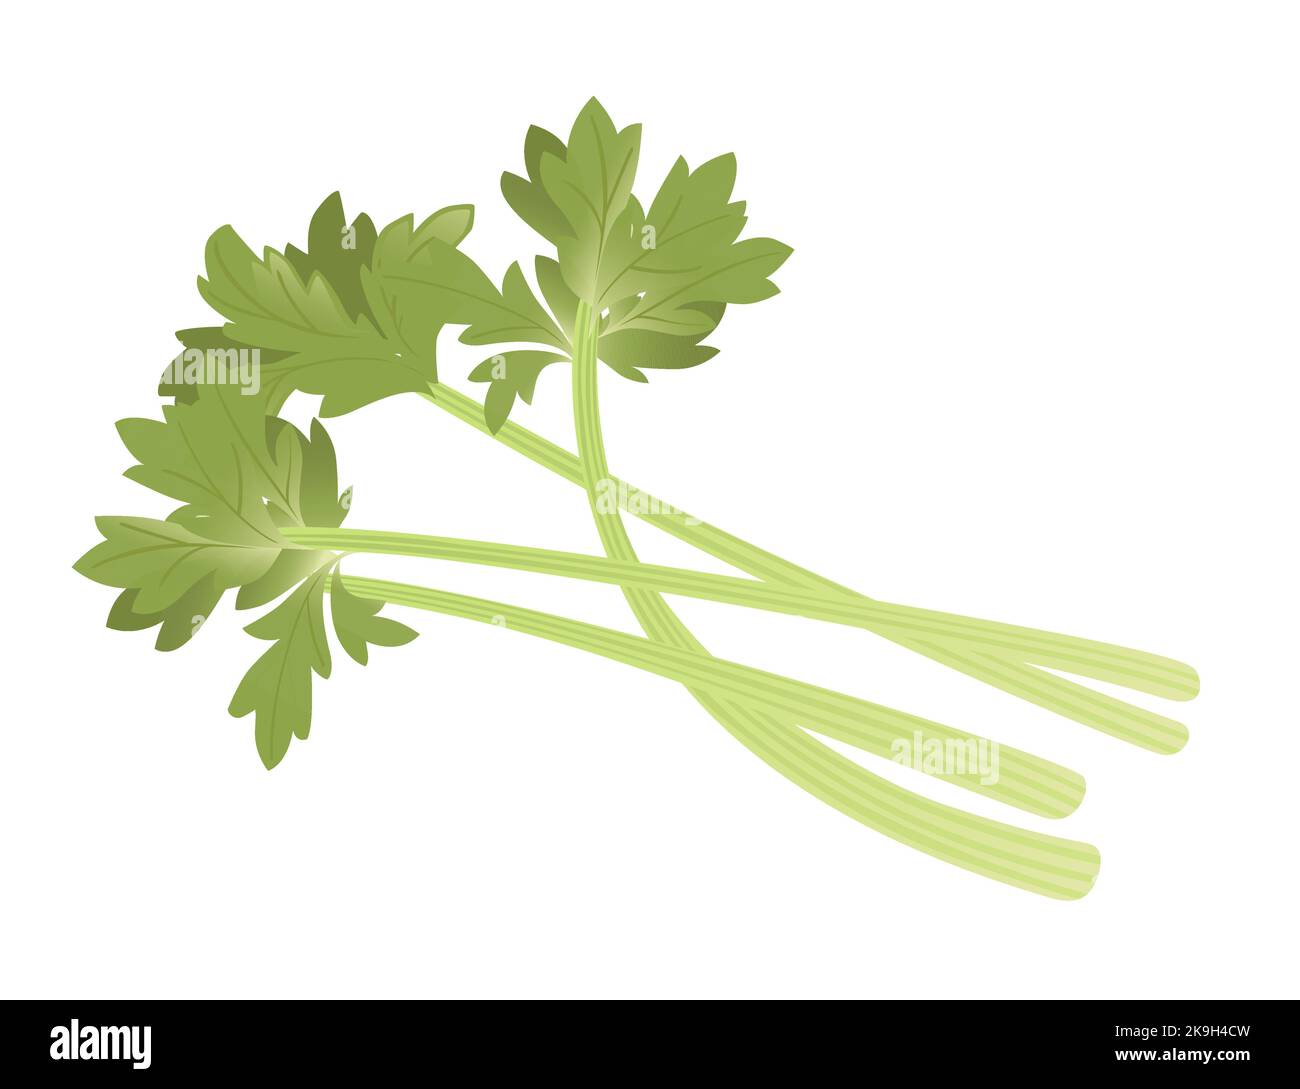 Celery green leaves cartoon vegetable plant vector illustration isolated on white background Stock Vector